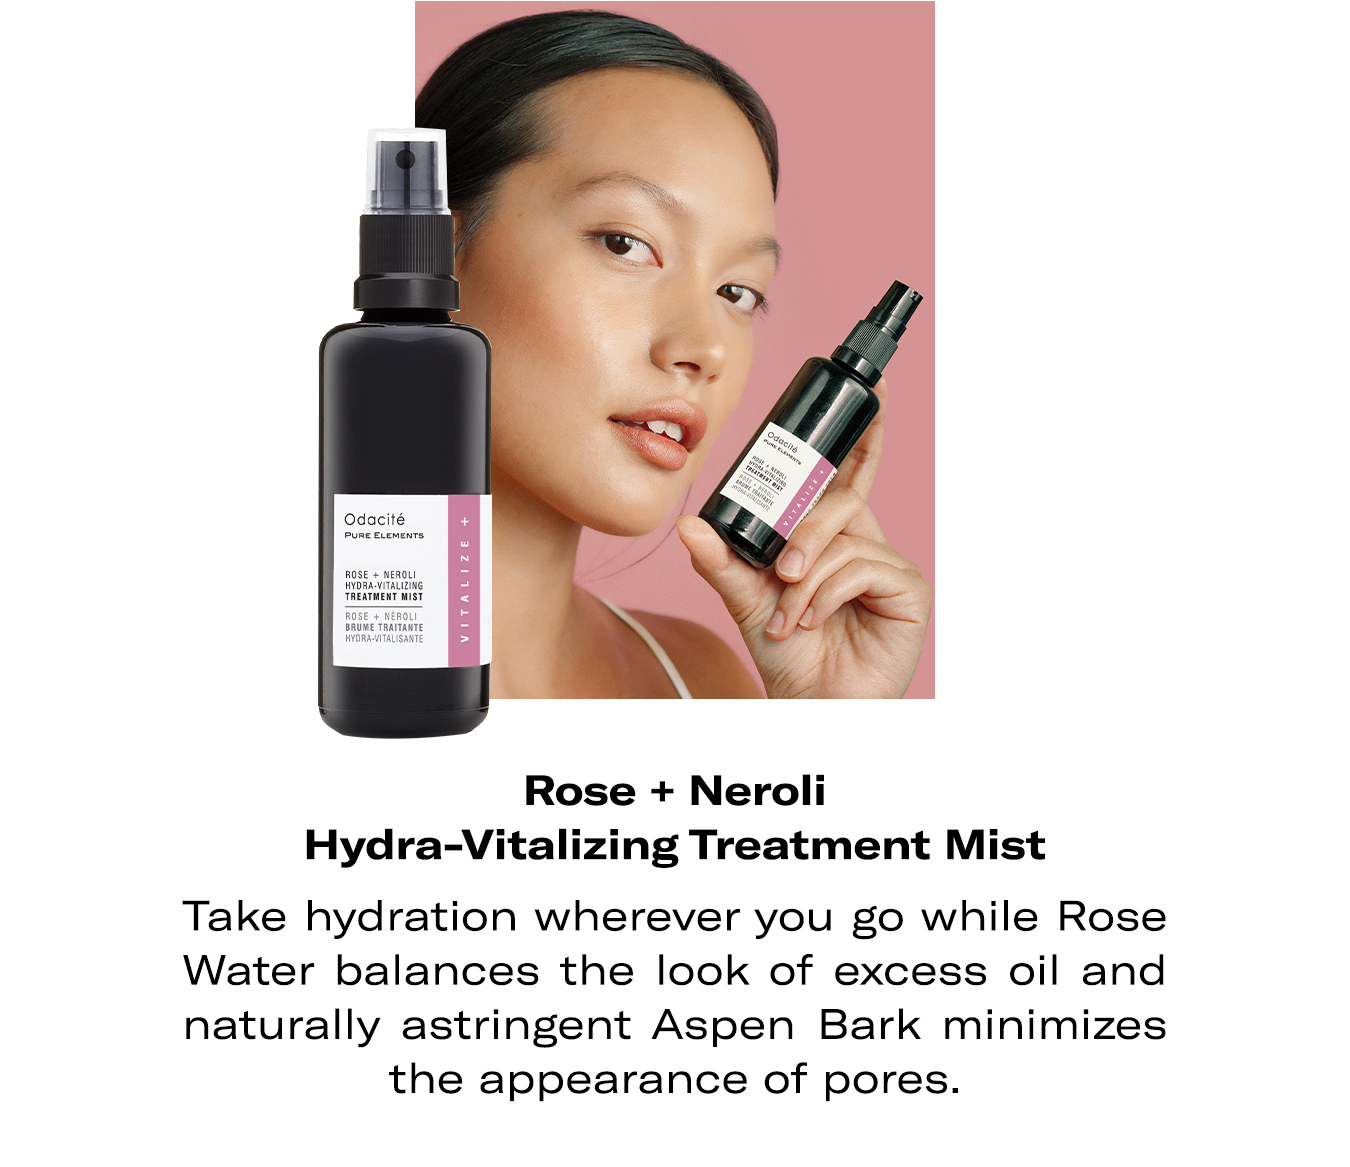 Rose + Neroli Hydra-Vitalizing Treatment Mist